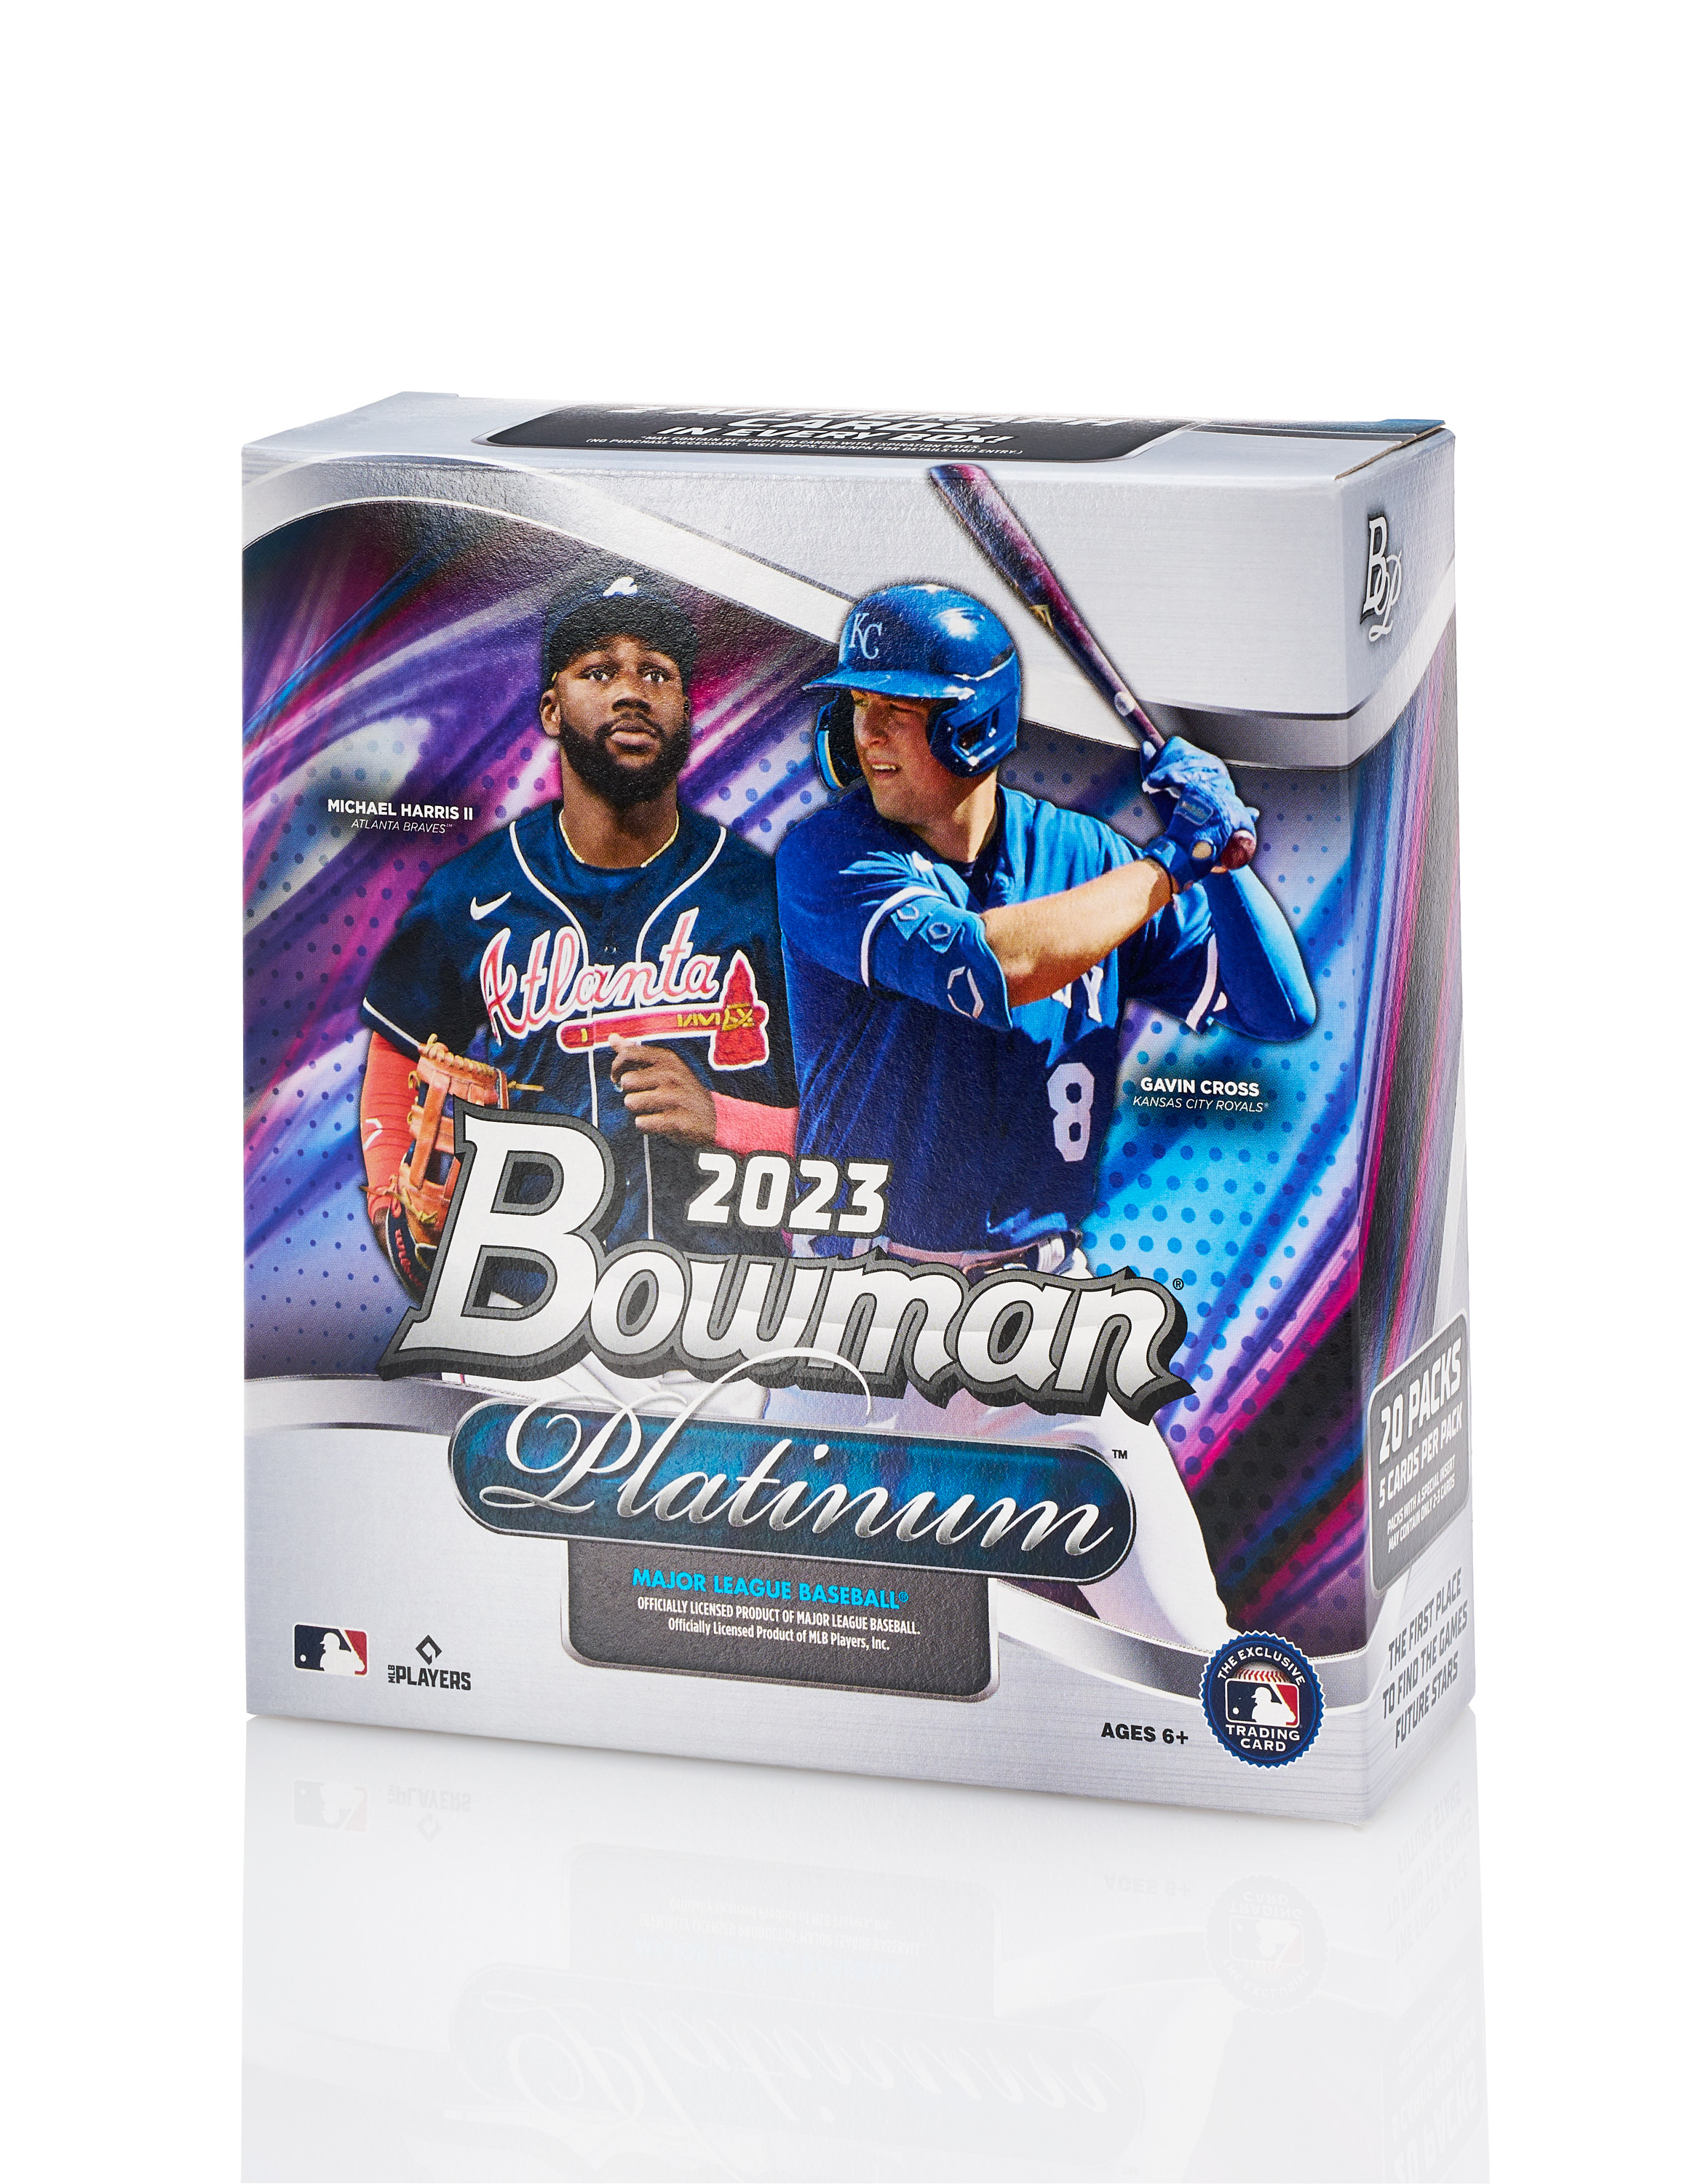 Bowman Cards (@BowmanCards) / X